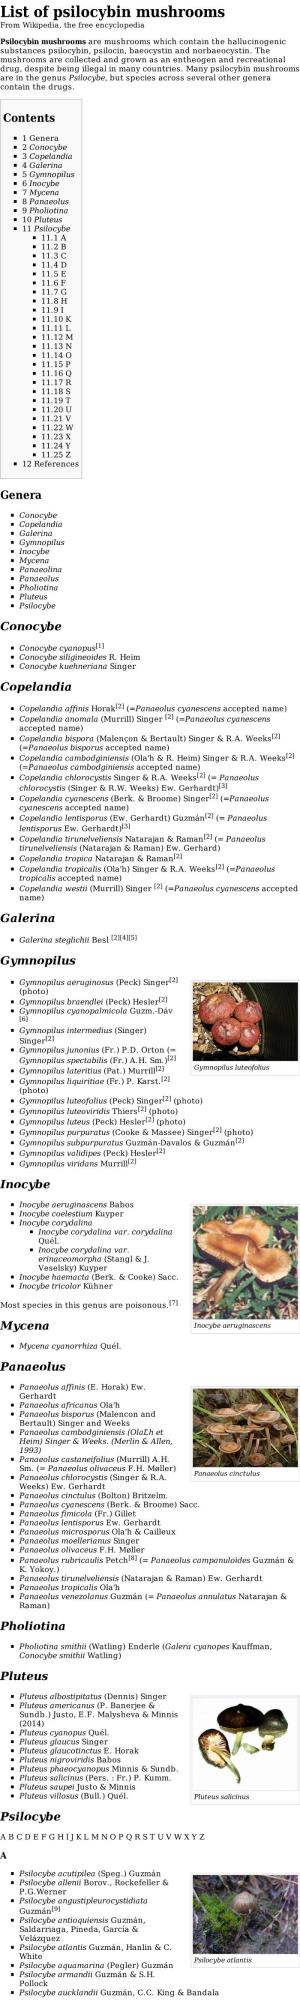 List of Psilocybin Mushrooms from Wikipedia, the Free Encyclopedia